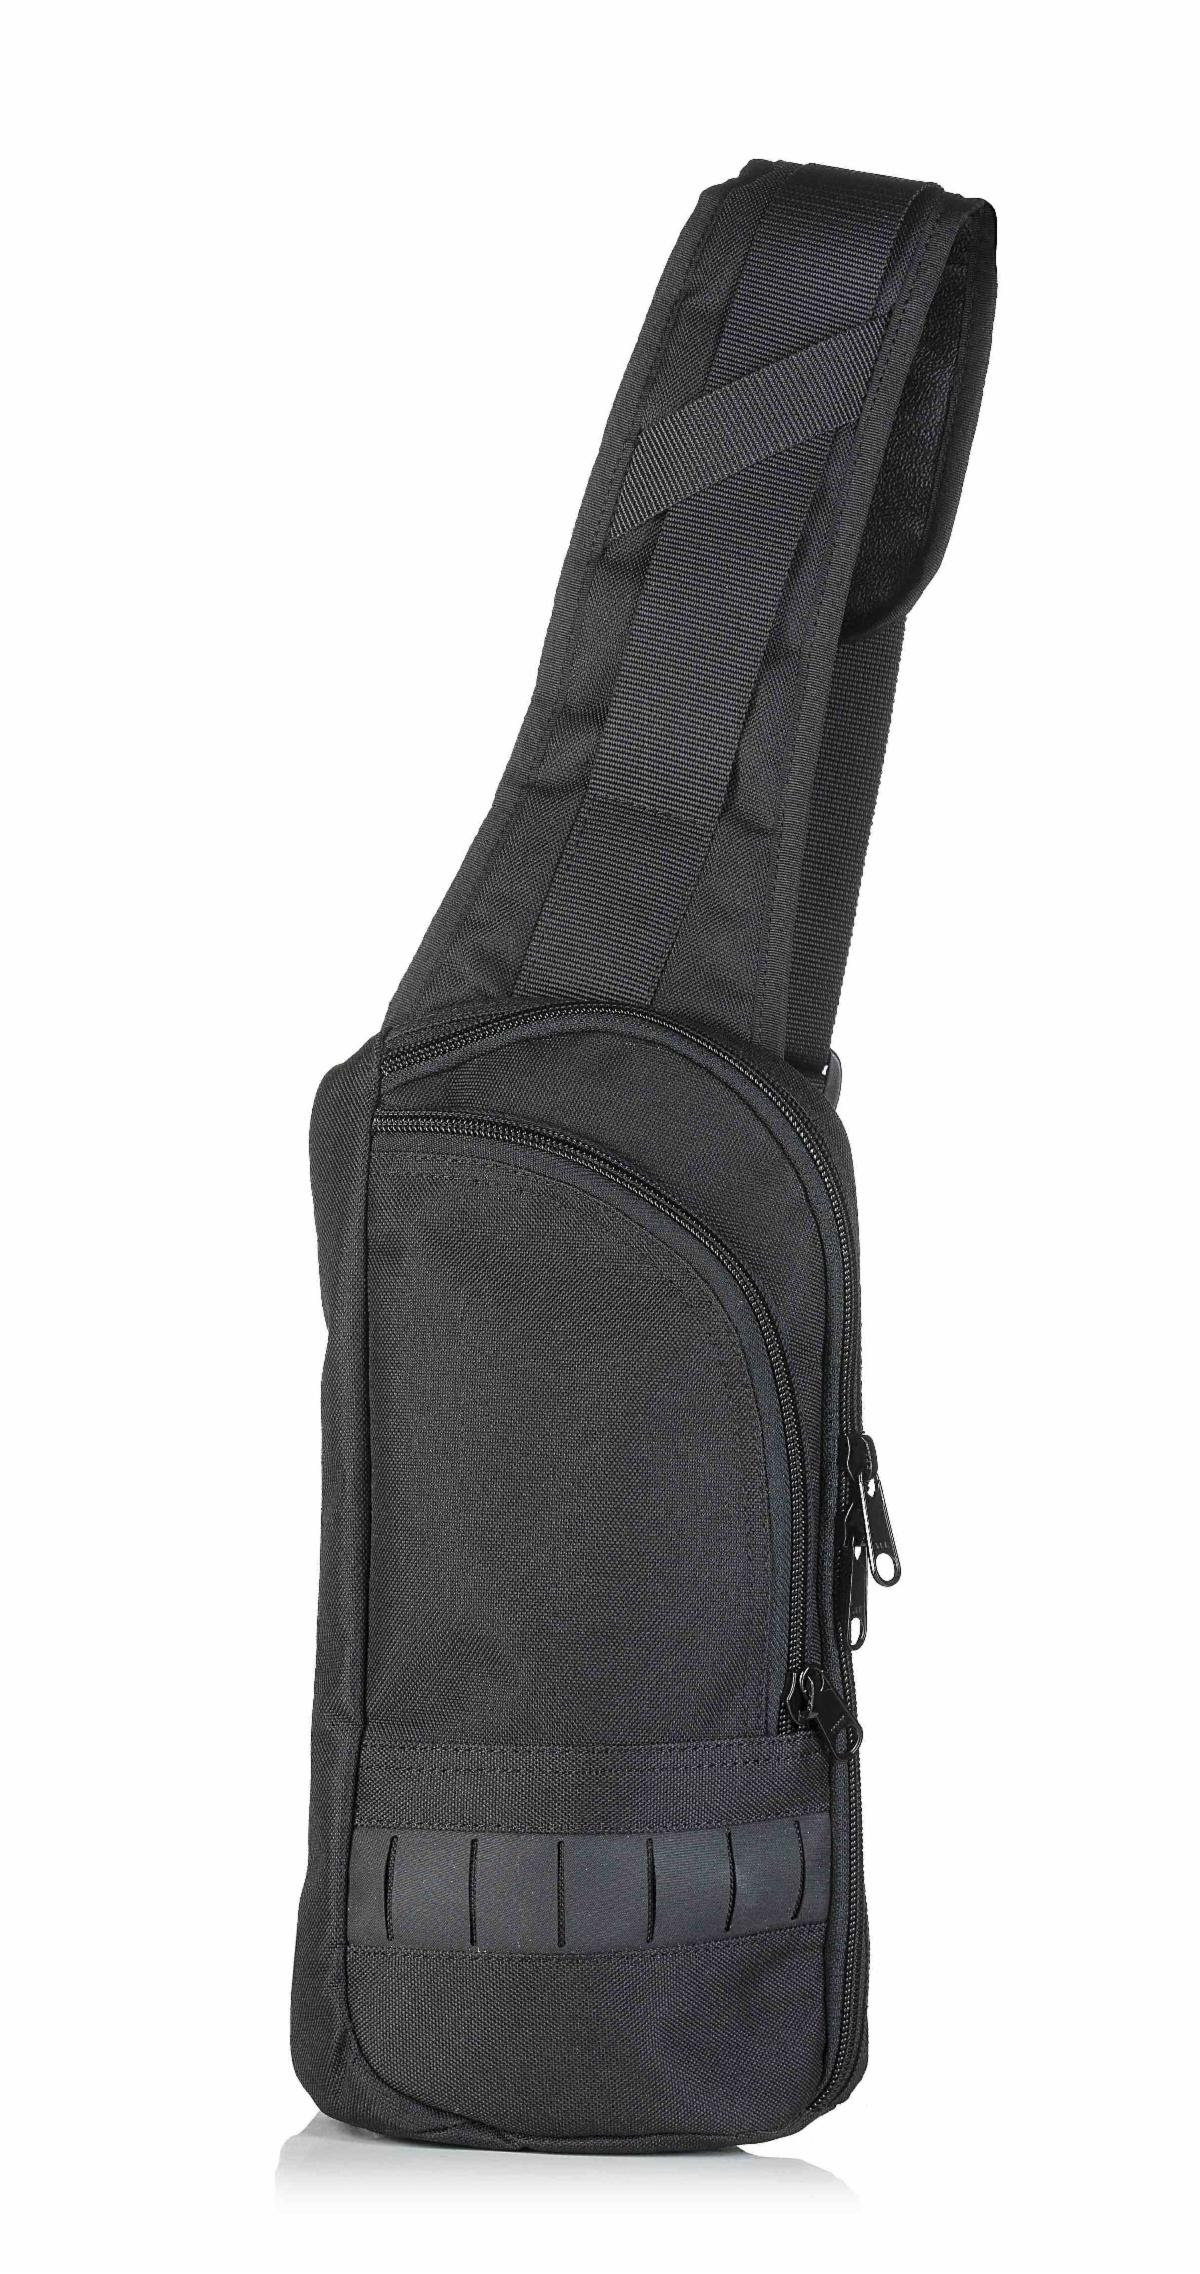 FALCO Holsters Simple Concealed Carry Hangdun Bag, CrossBody Bag